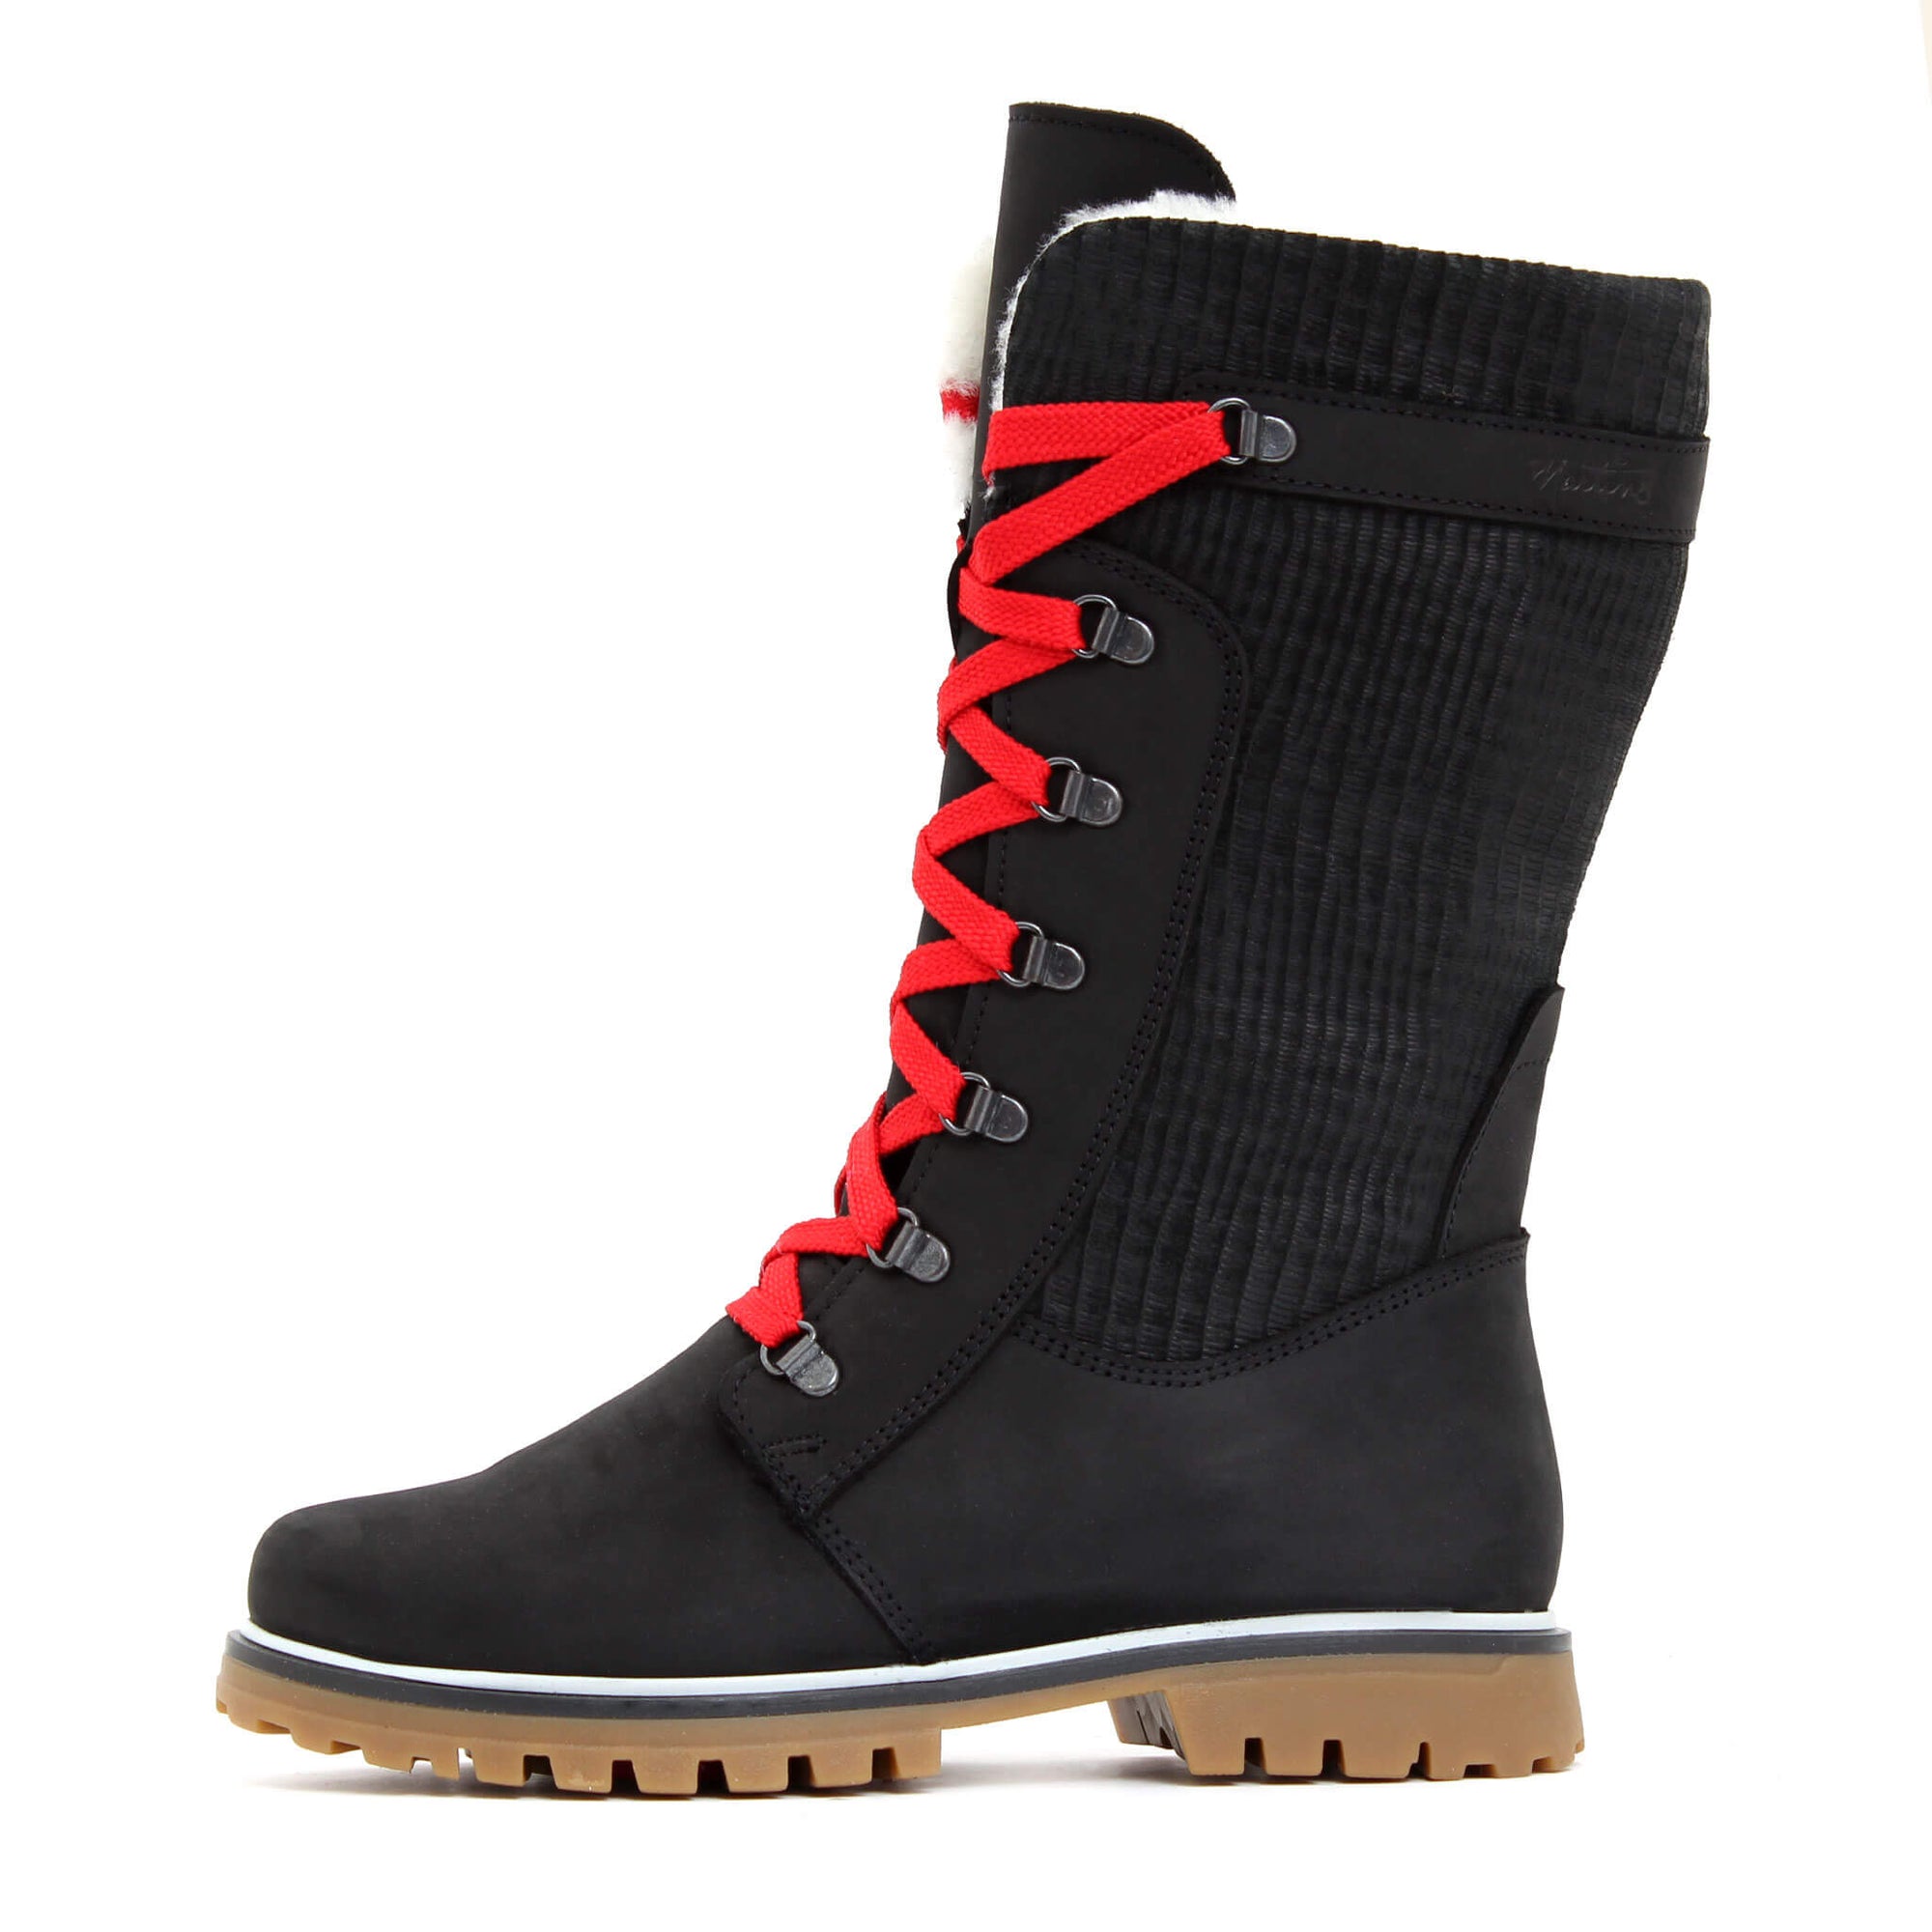 Marlee winter boot for women - Black 